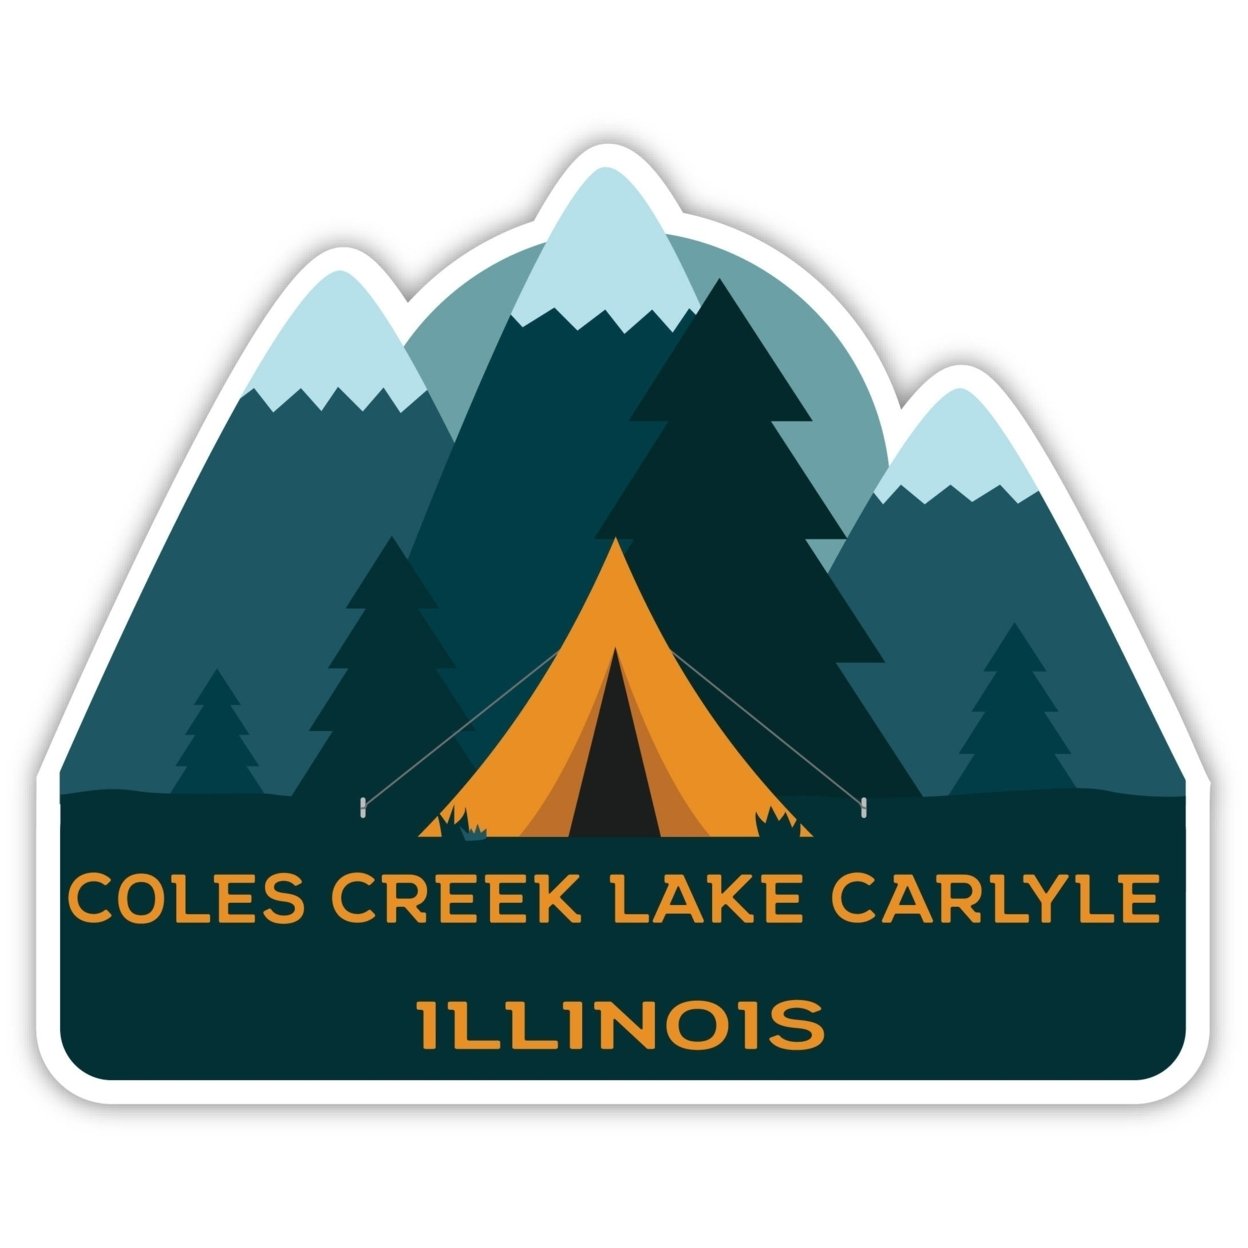 Coles Creek Lake Carlyle Illinois Souvenir Decorative Stickers (Choose Theme And Size) - Single Unit, 4-Inch, Tent